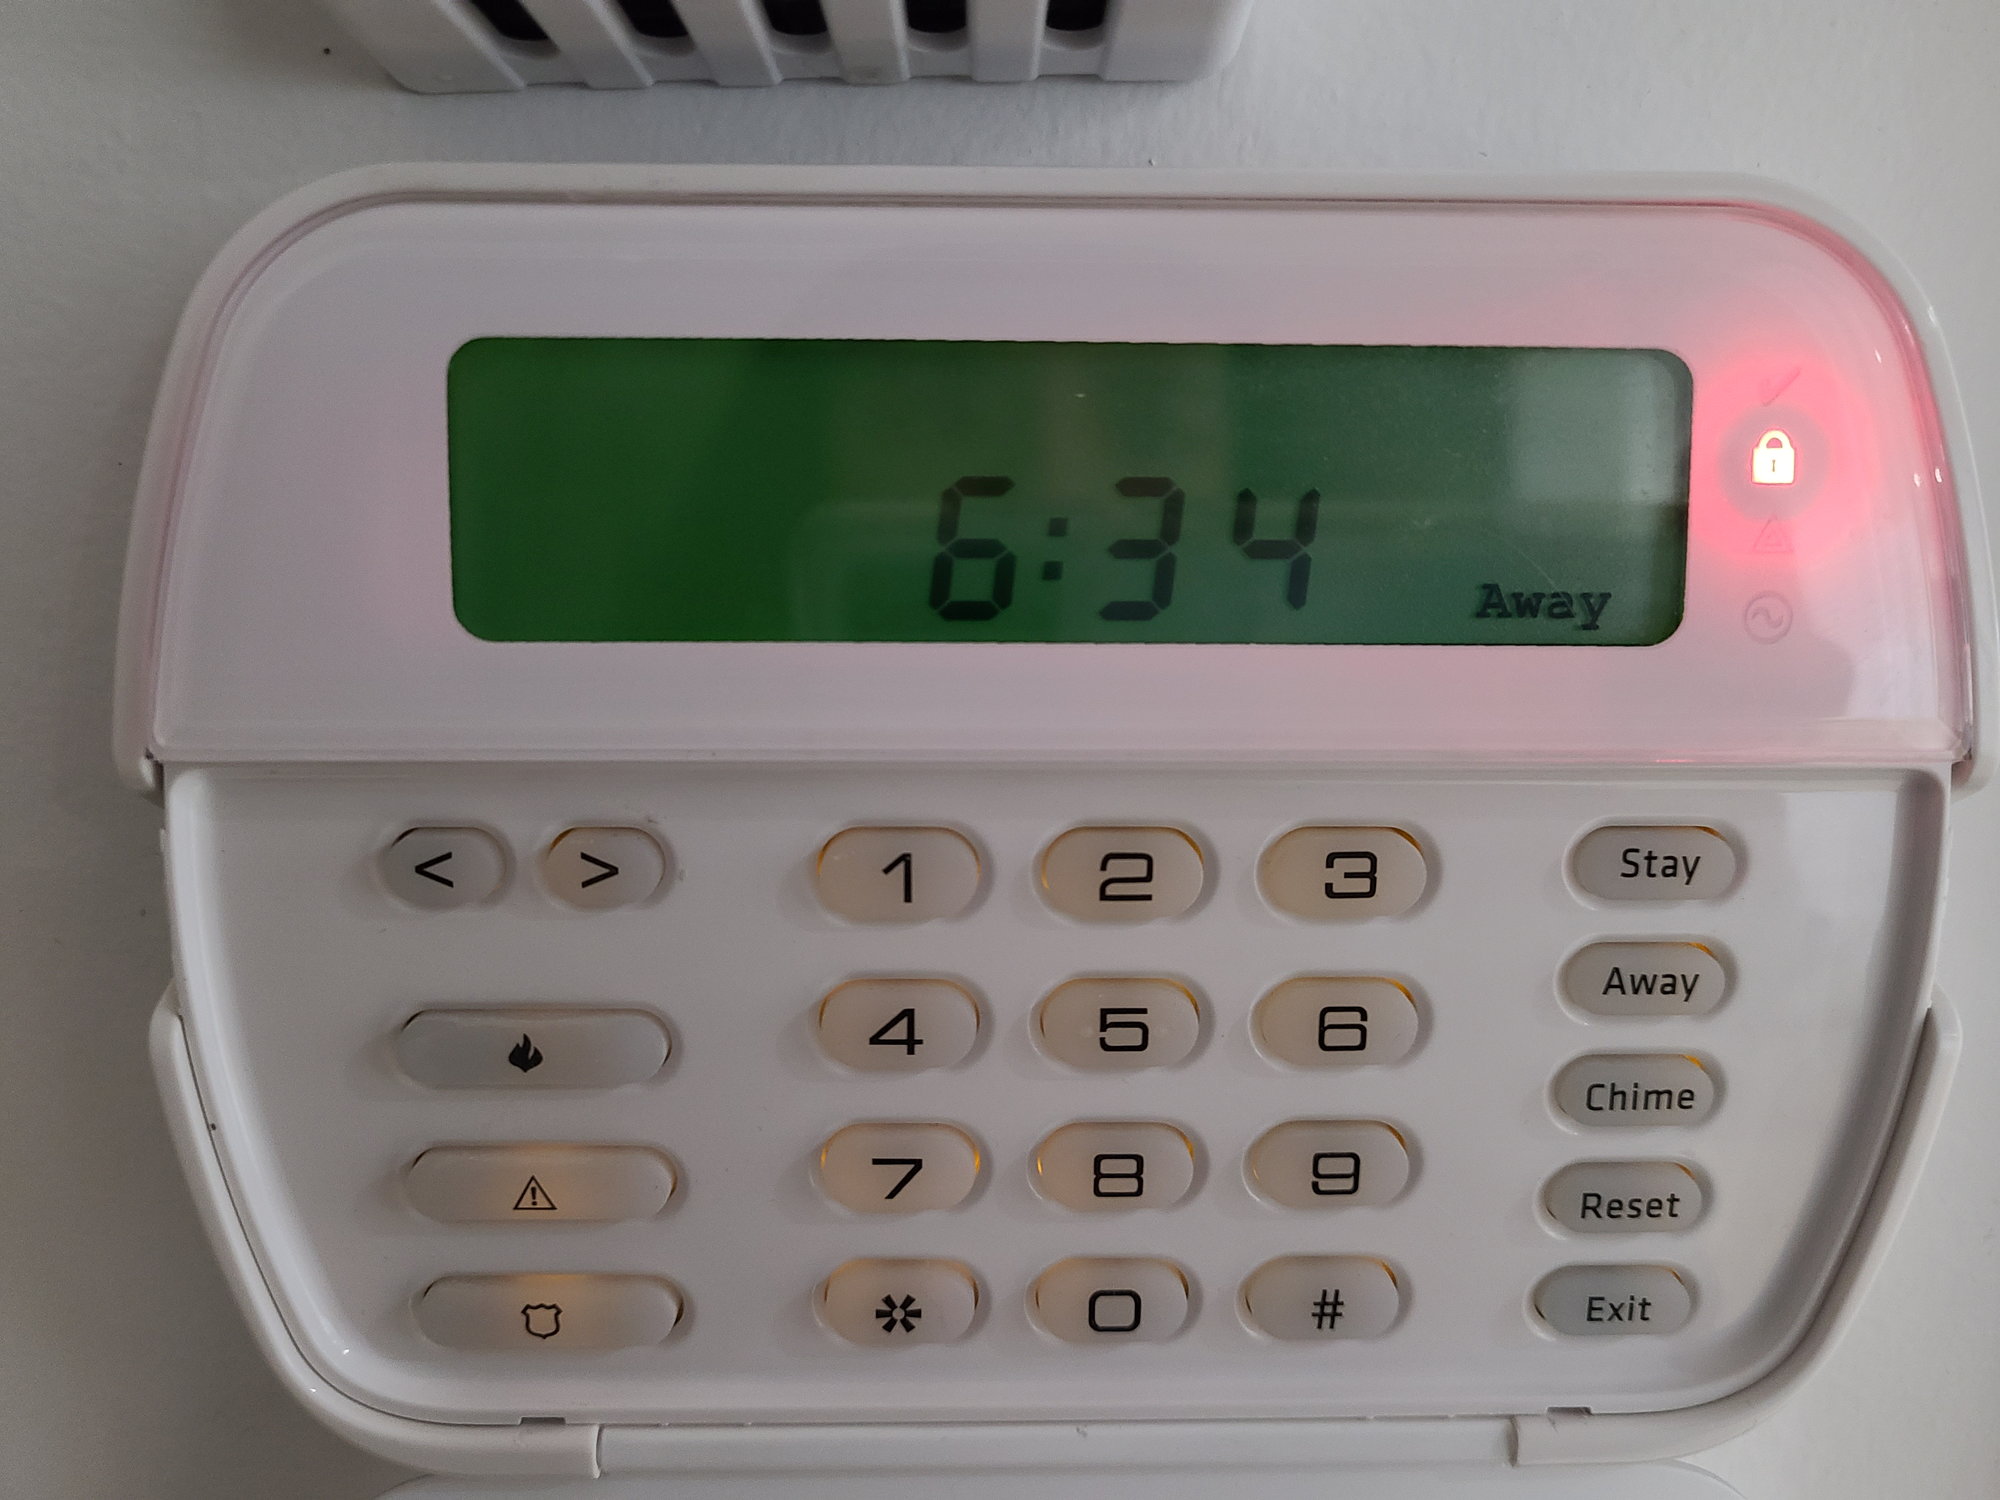 dsc alarm panel shows open